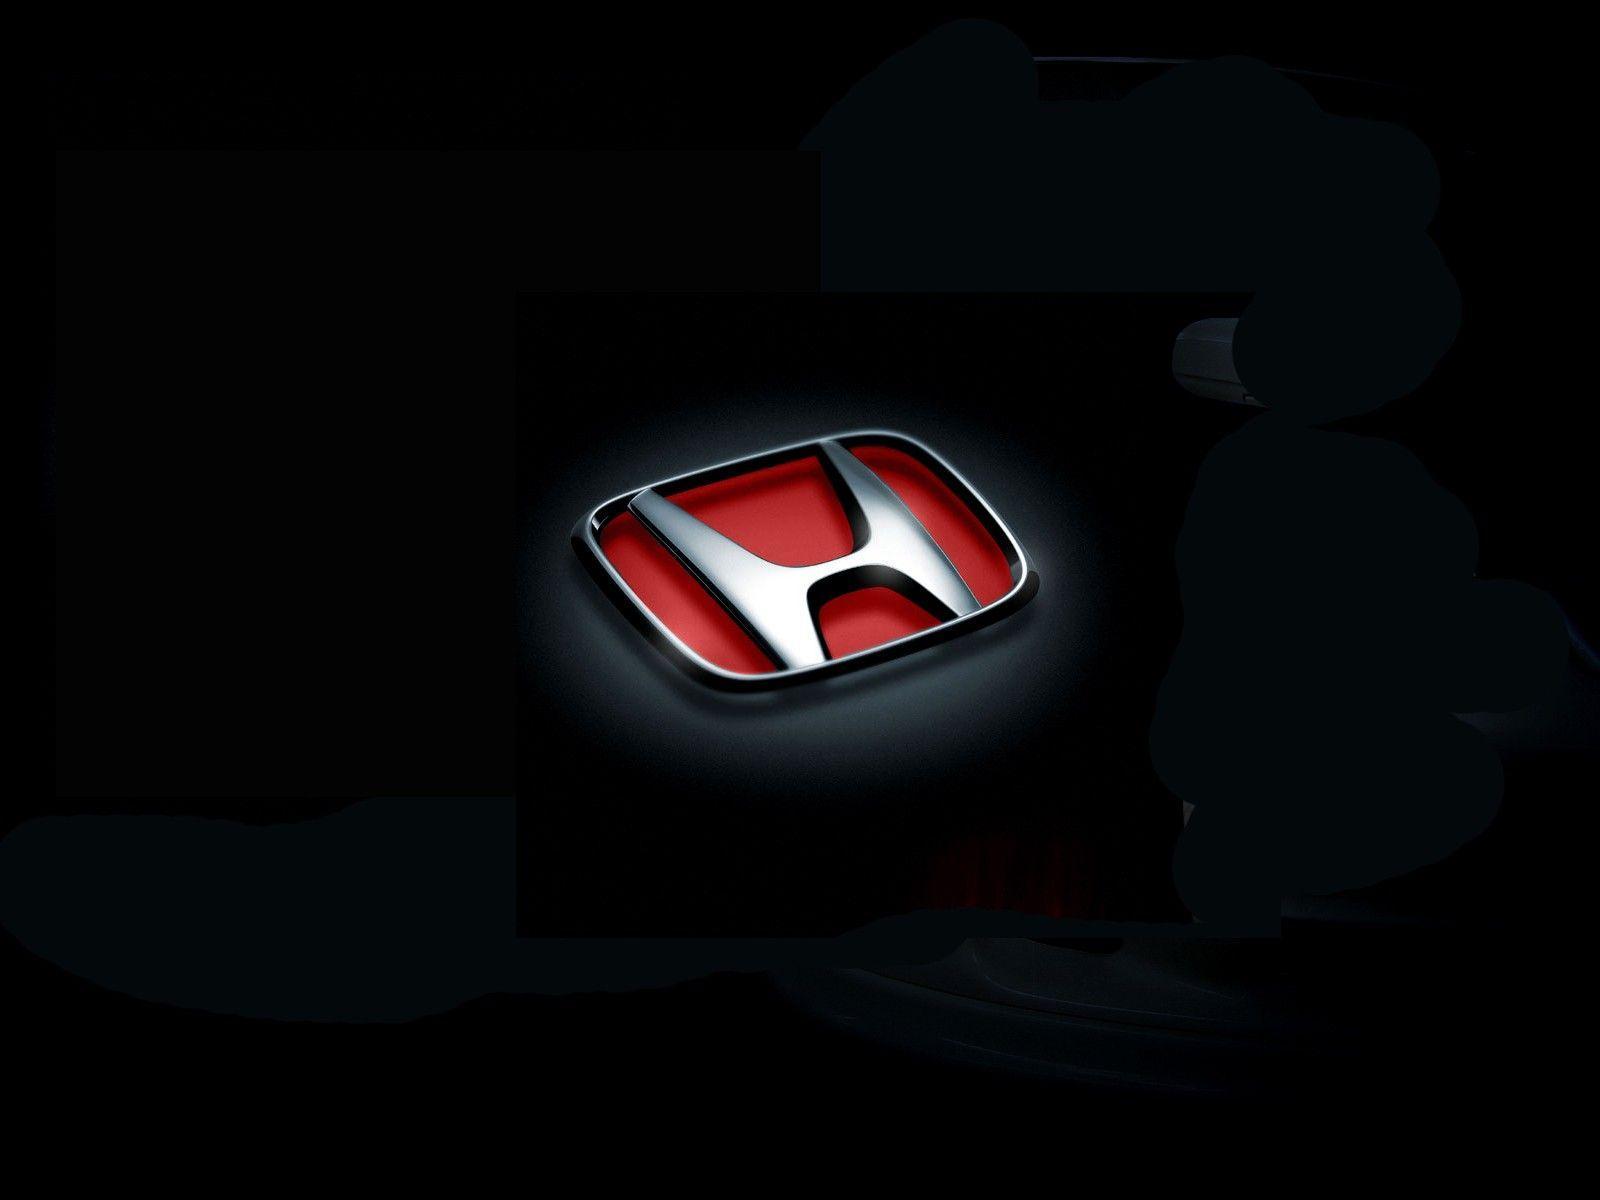 HD Honda Backgrounds & Honda Wallpapers Image For Download